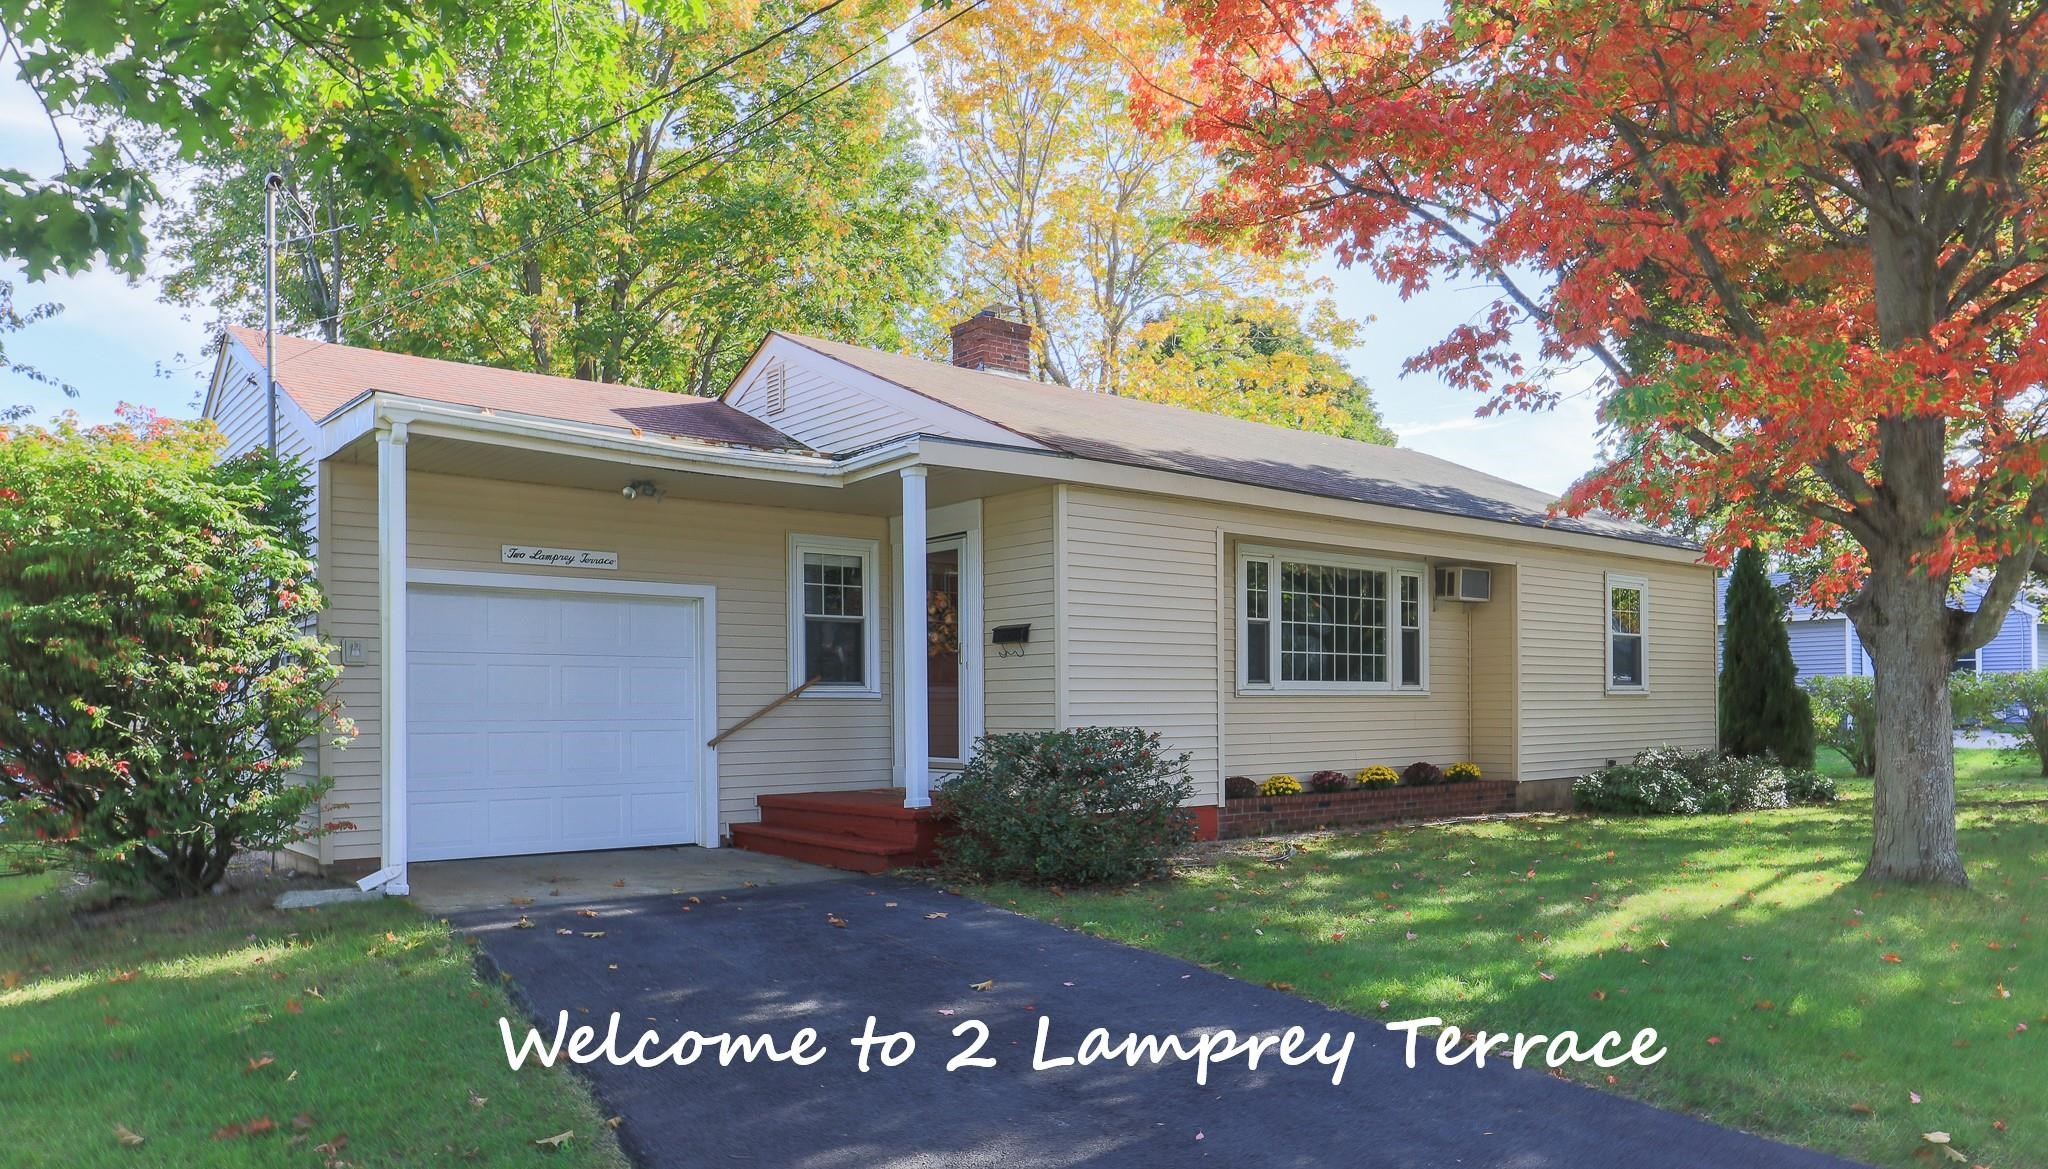 2 Lamprey Terrace Hampton, NH Photo